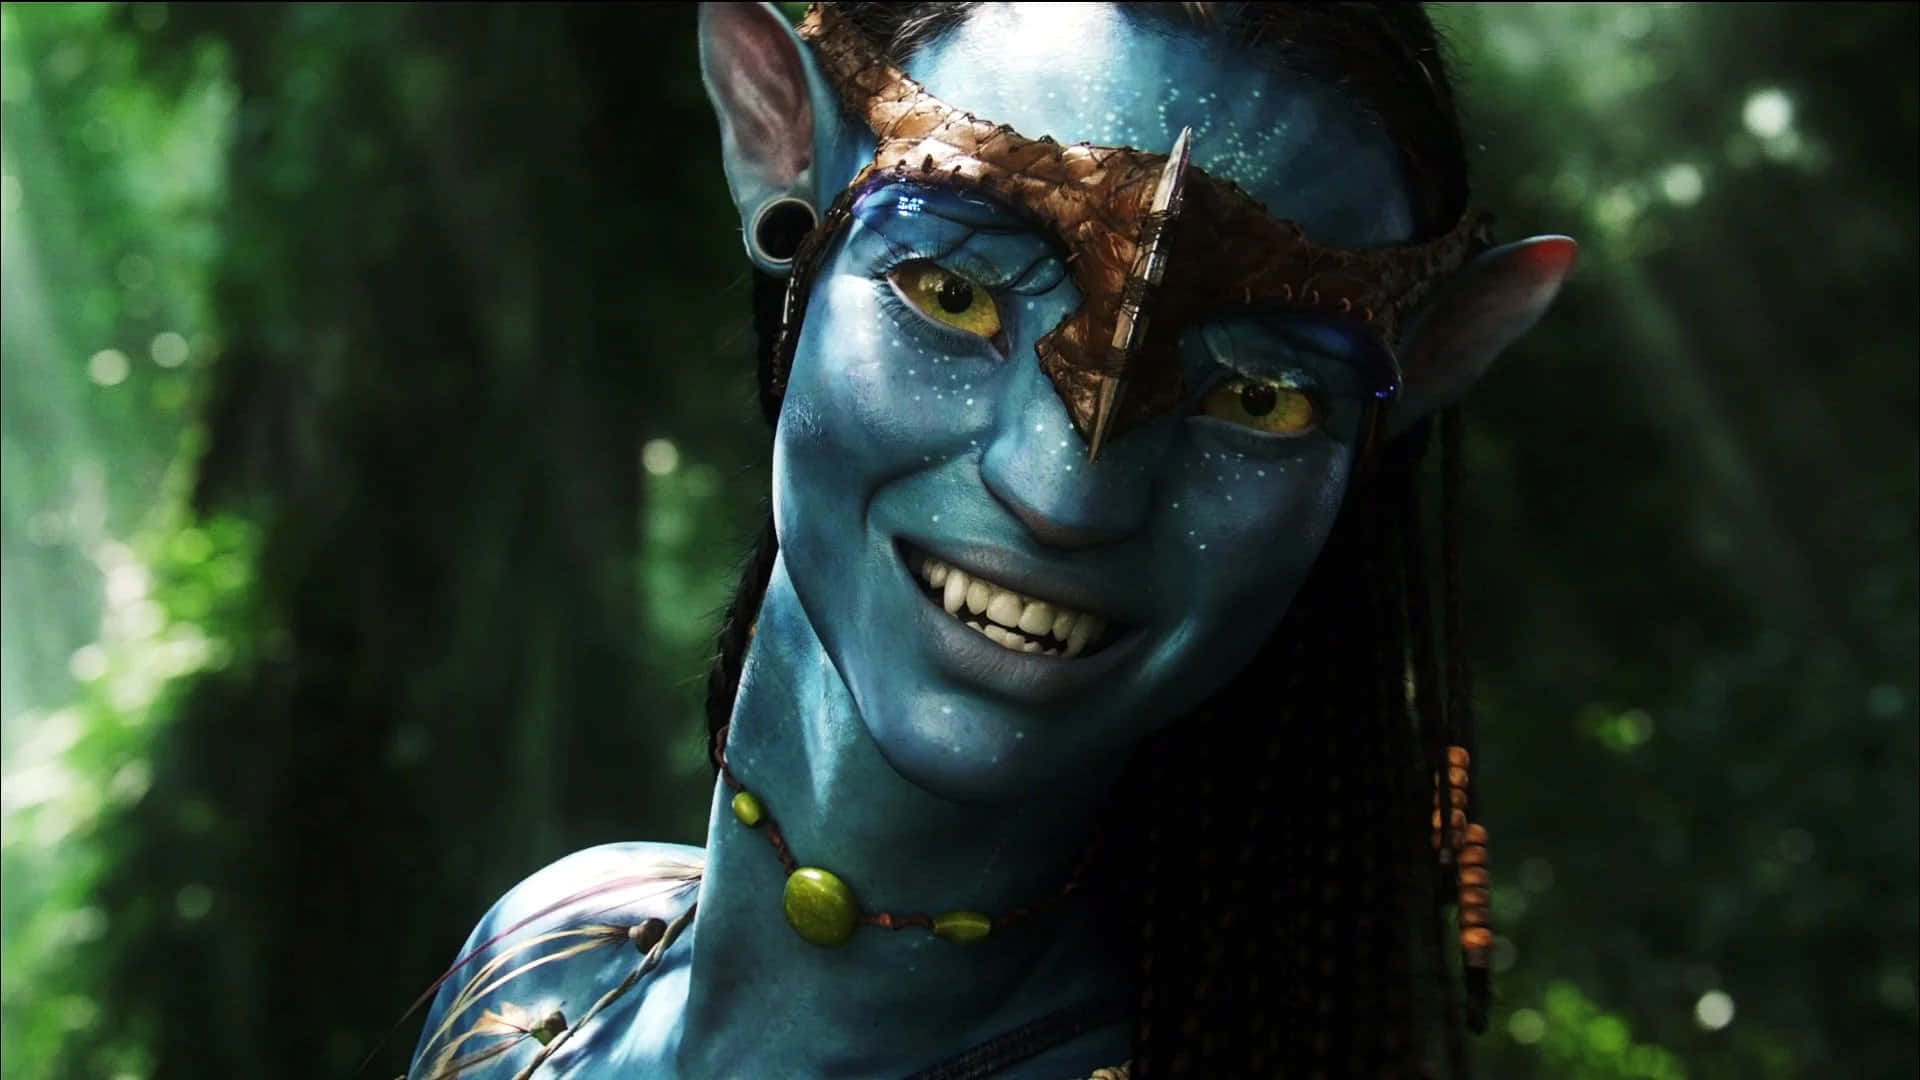 James Cameron's epic blockbuster Avatar transports viewers to the far-away alien world of Pandora